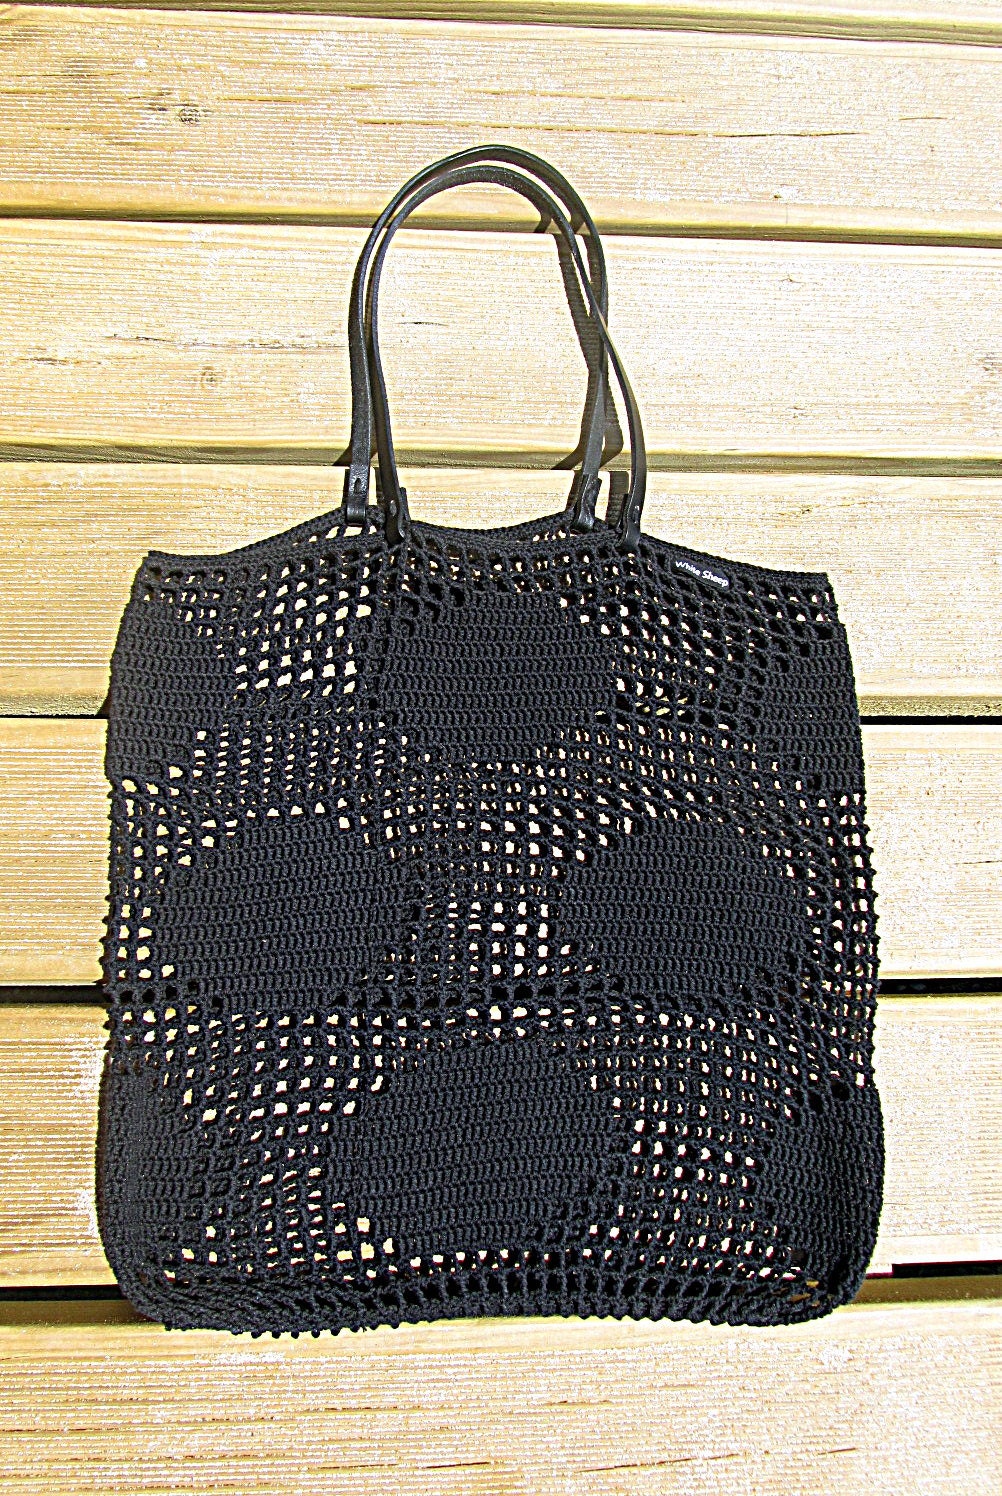 BLACK Polka Dots TOTE BAG // Crochet Tote Bag Leather Handles